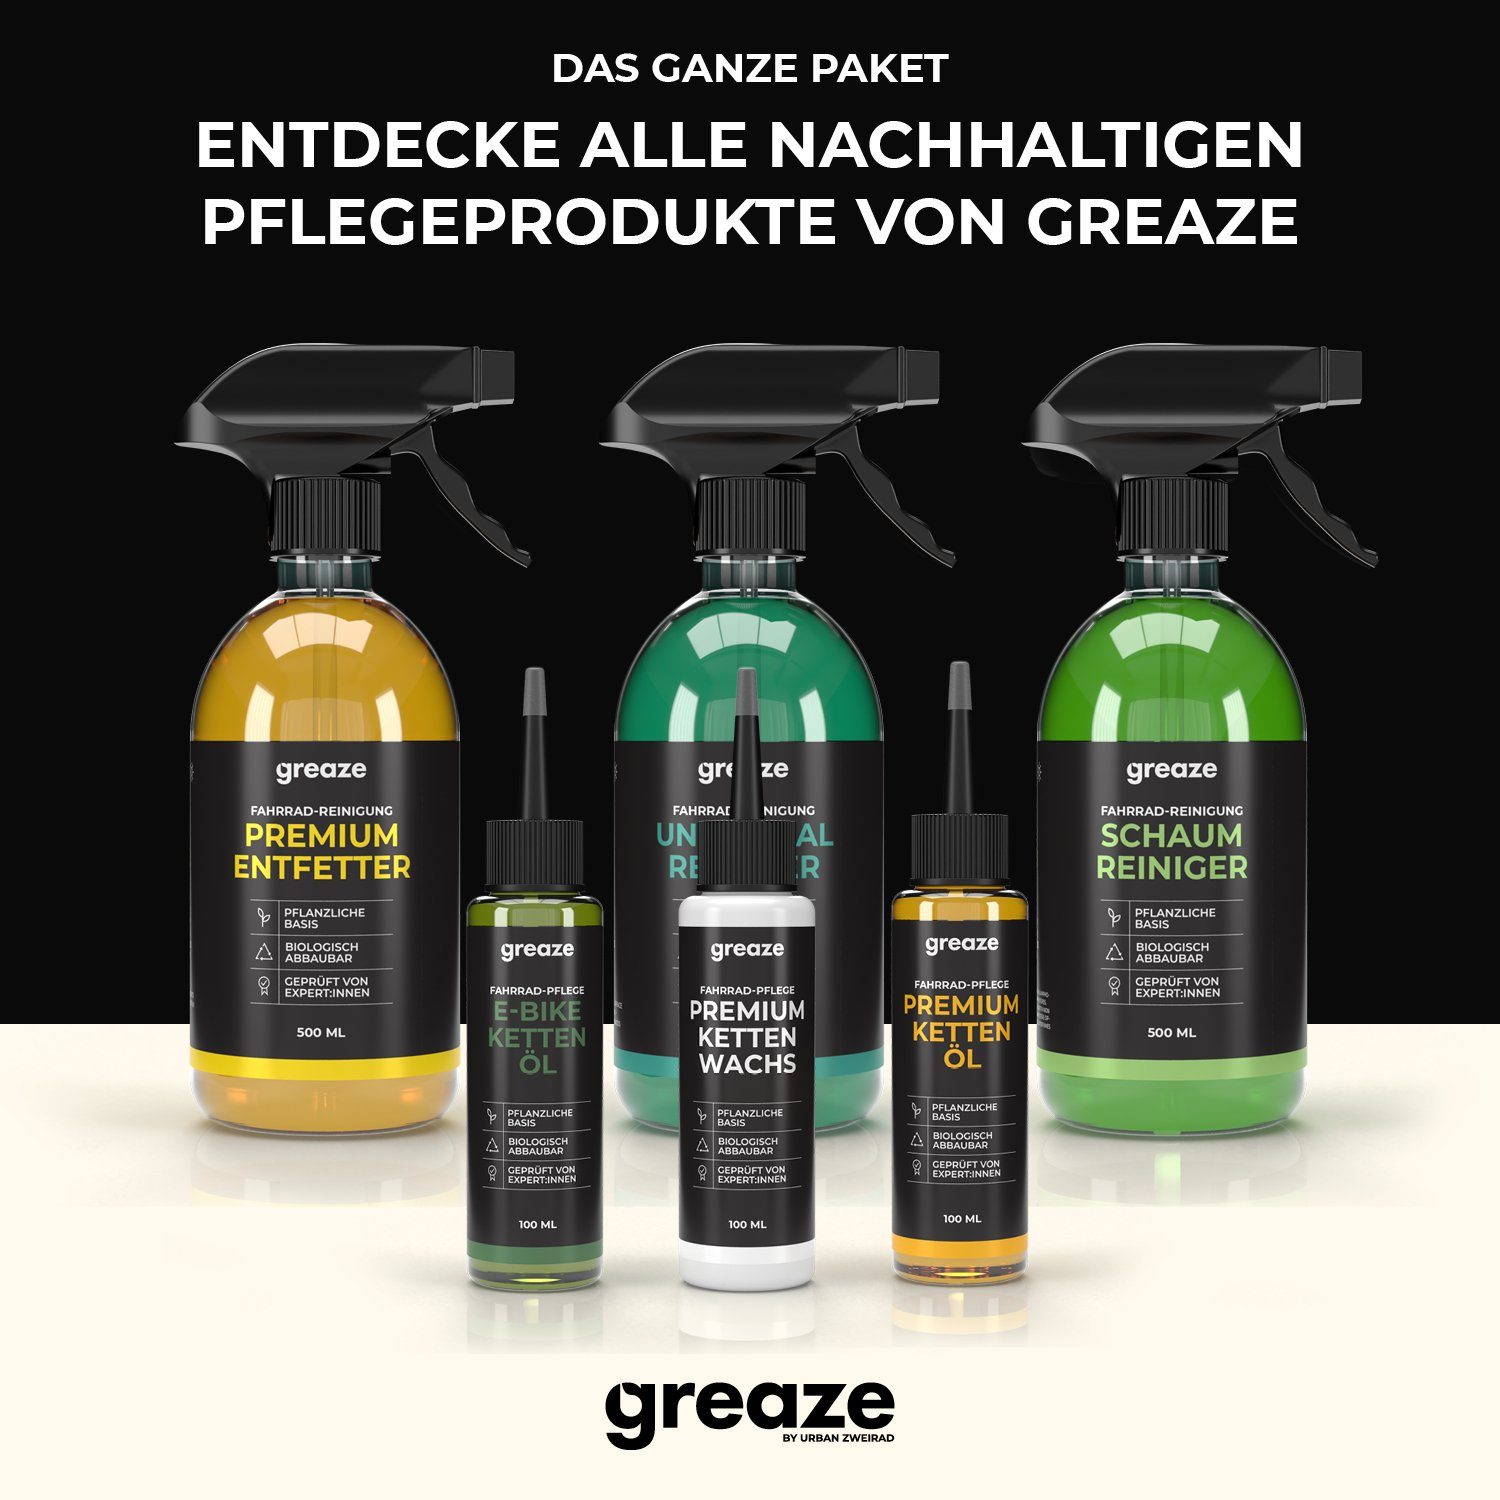 greaze Premium Kettenöl Kettenpflege langlebiges nachhaltige Fahrradketten Fahrrad Kettenöl